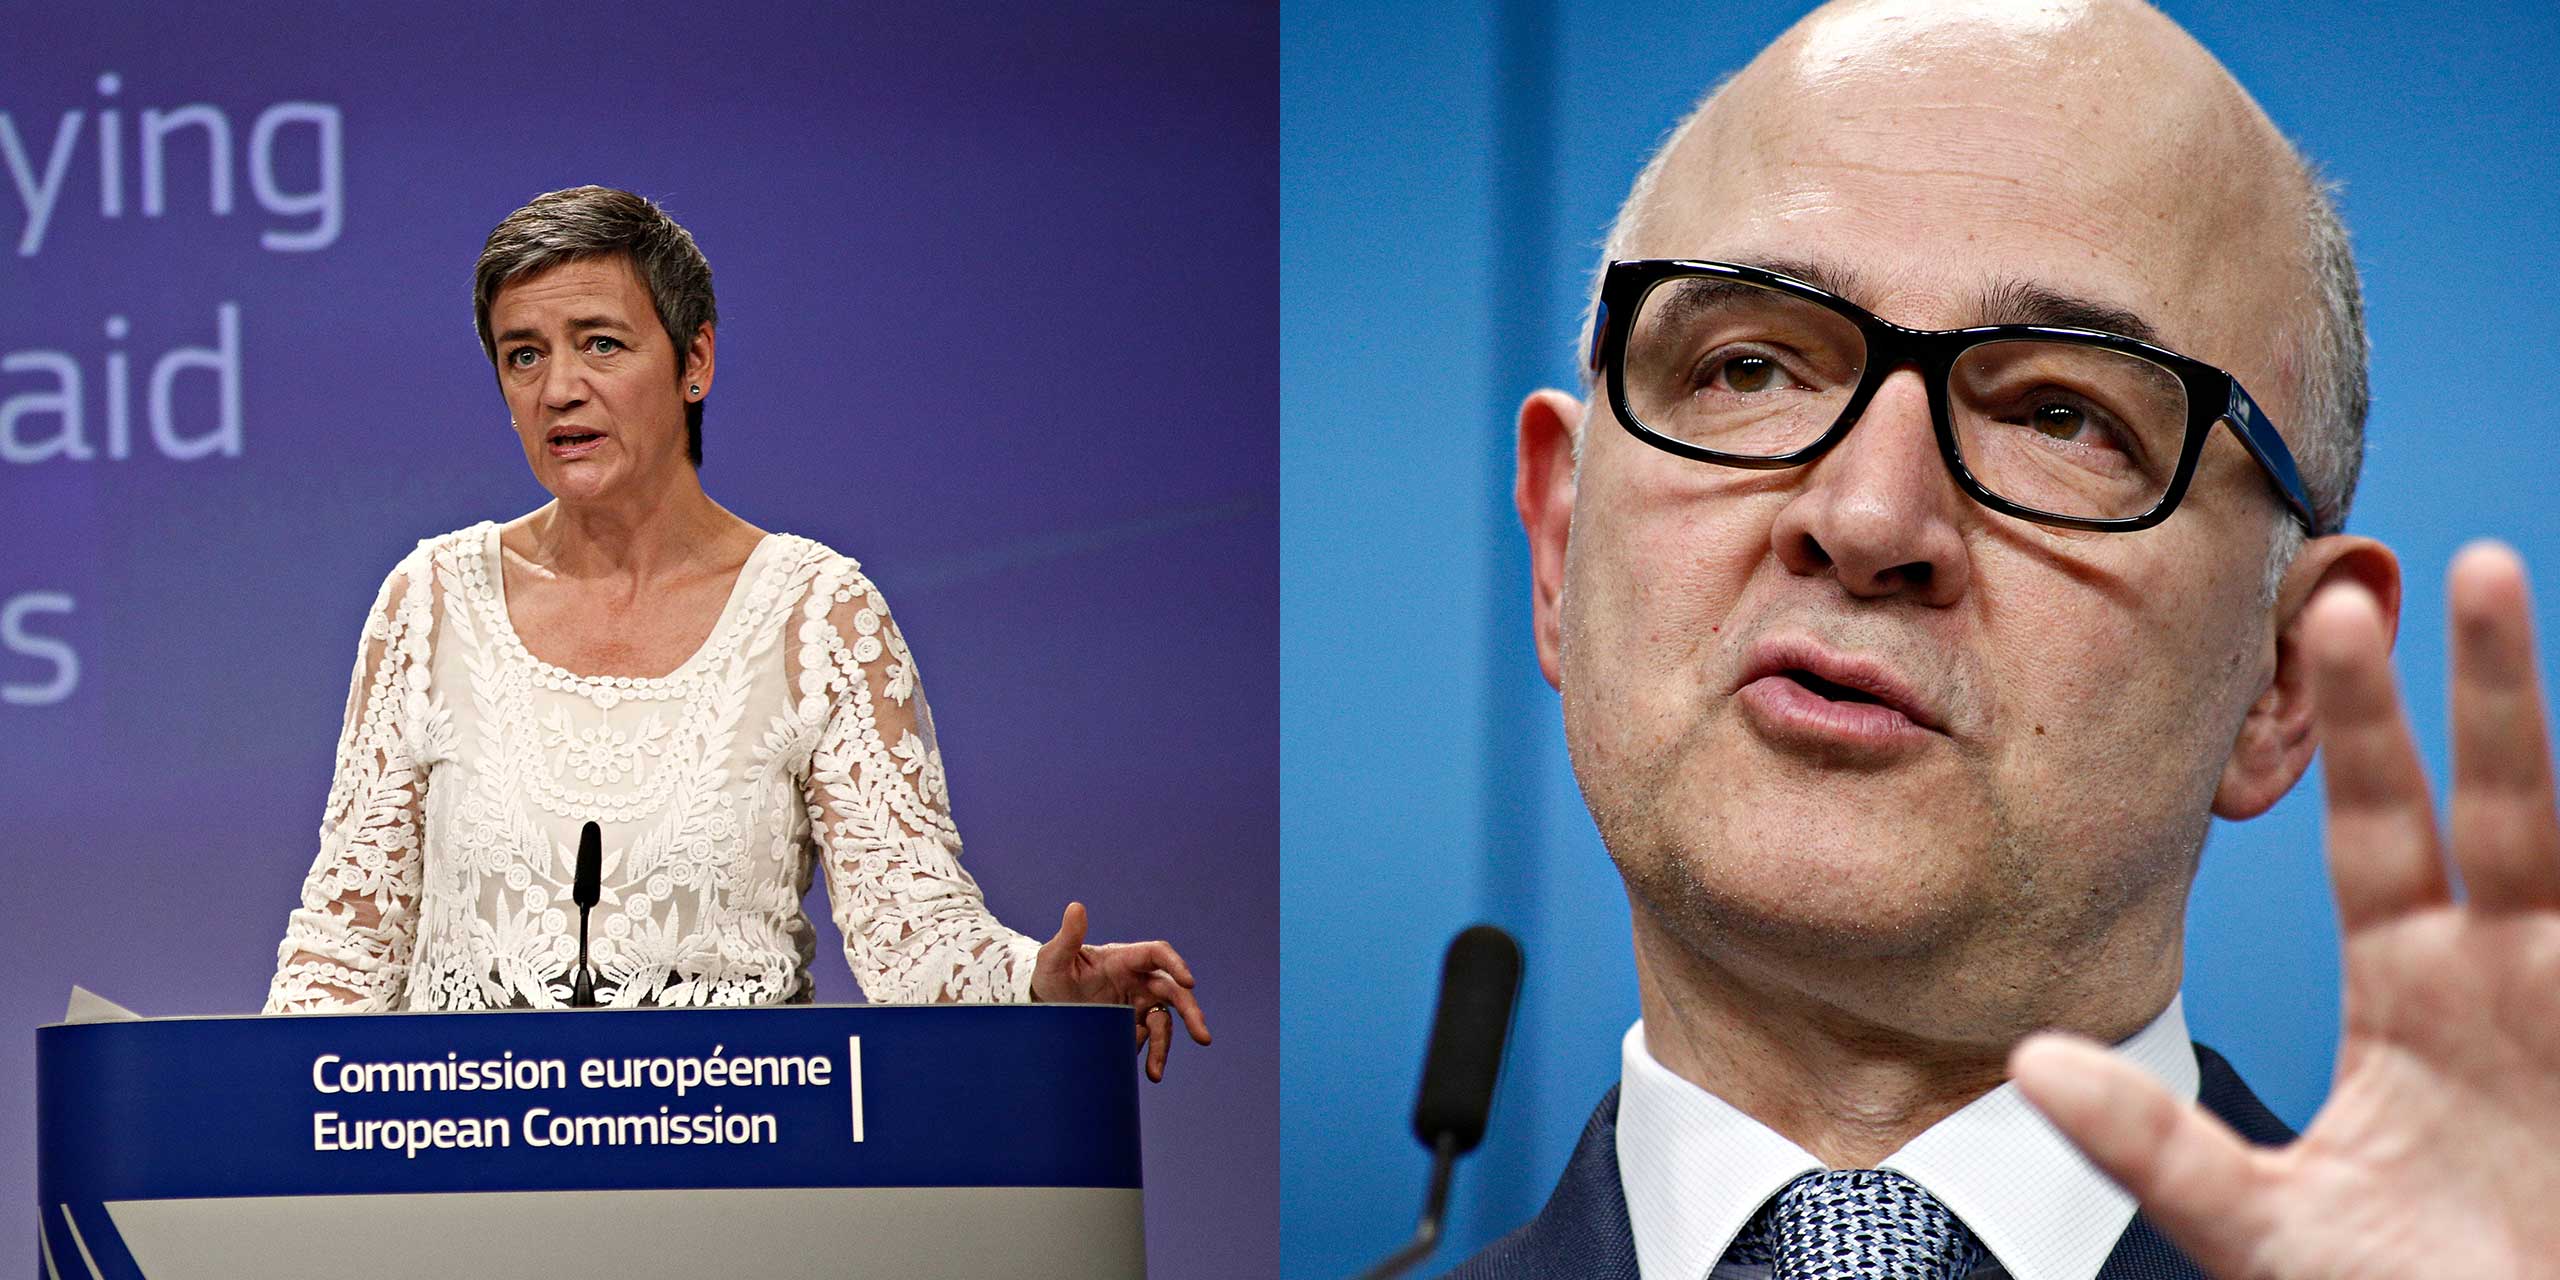 Vlnr: Margrethe Vestager, Pierre Moscovici 